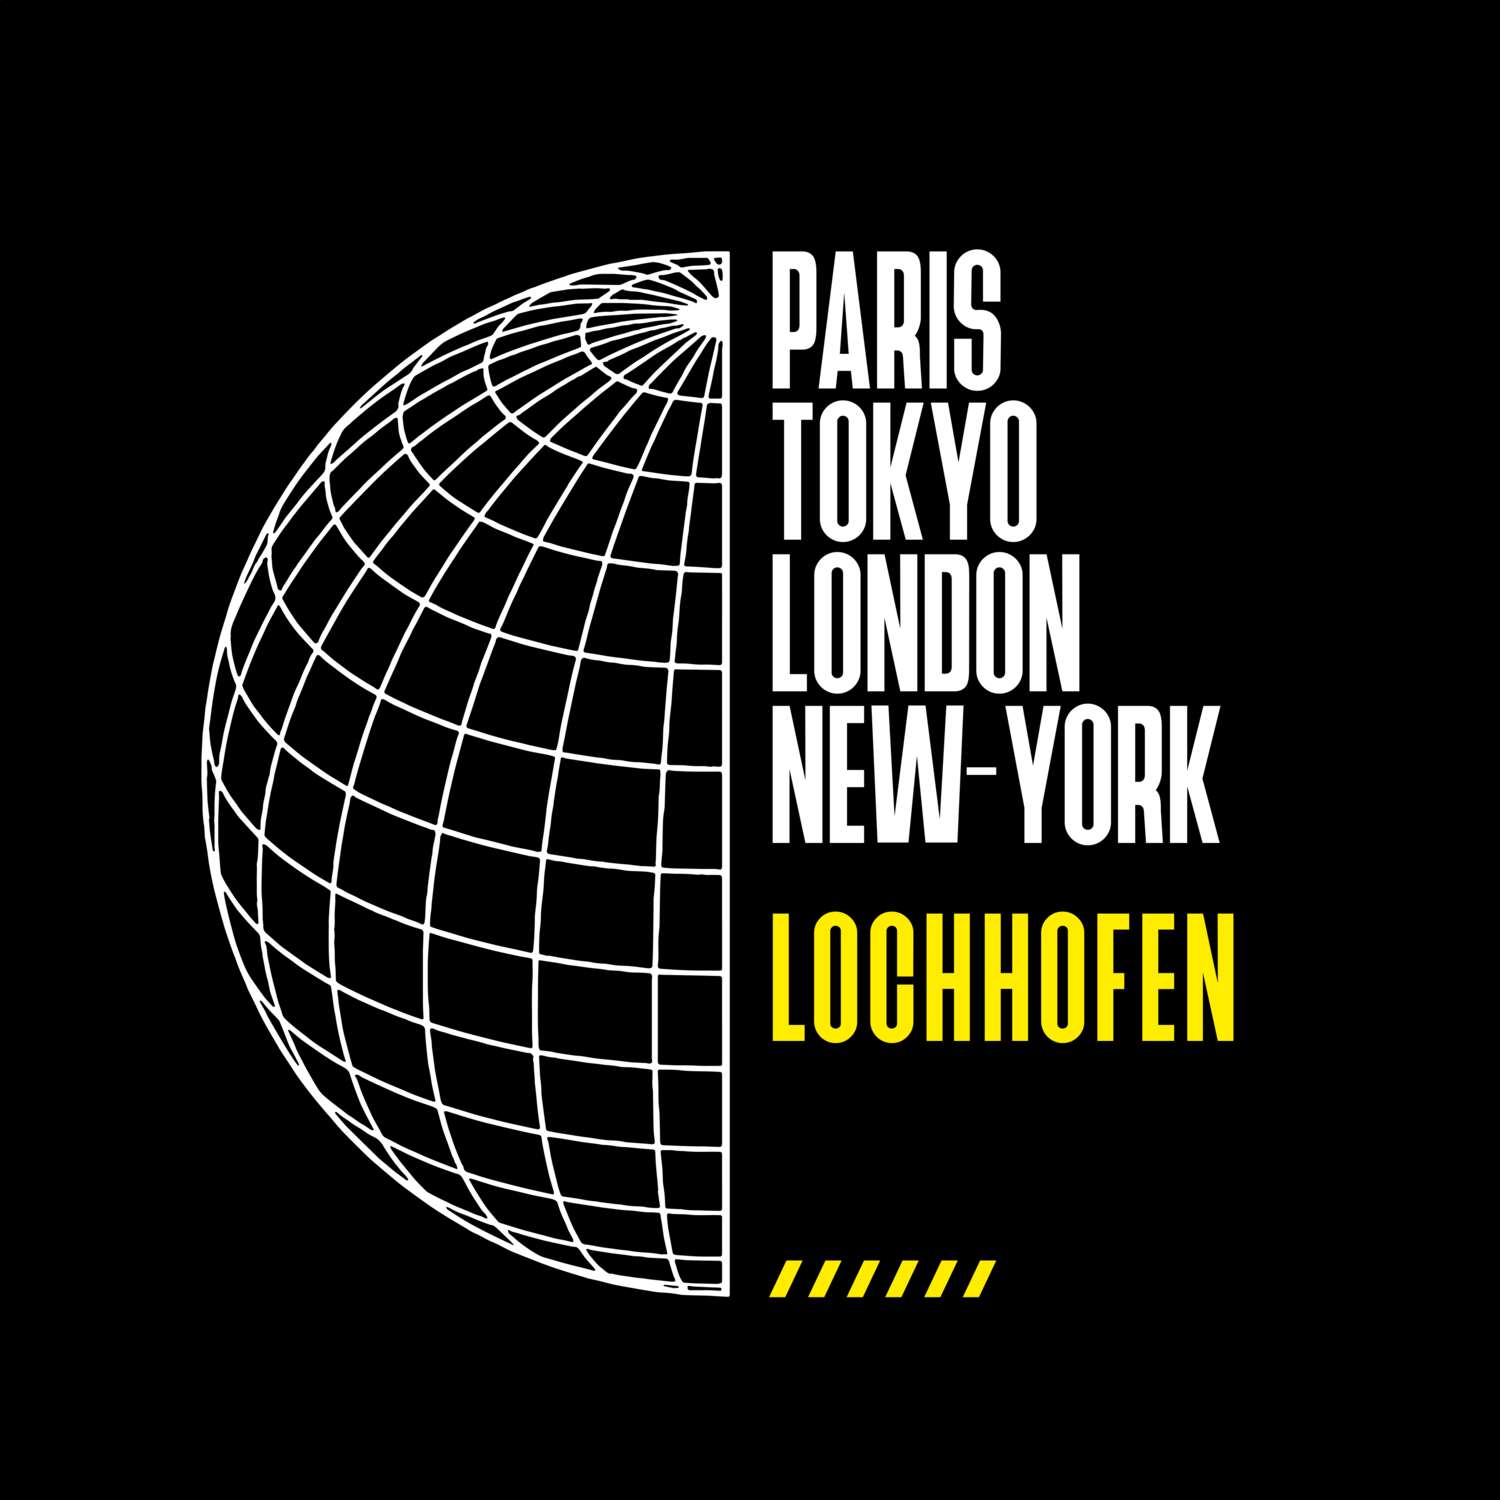 Lochhofen T-Shirt »Paris Tokyo London«